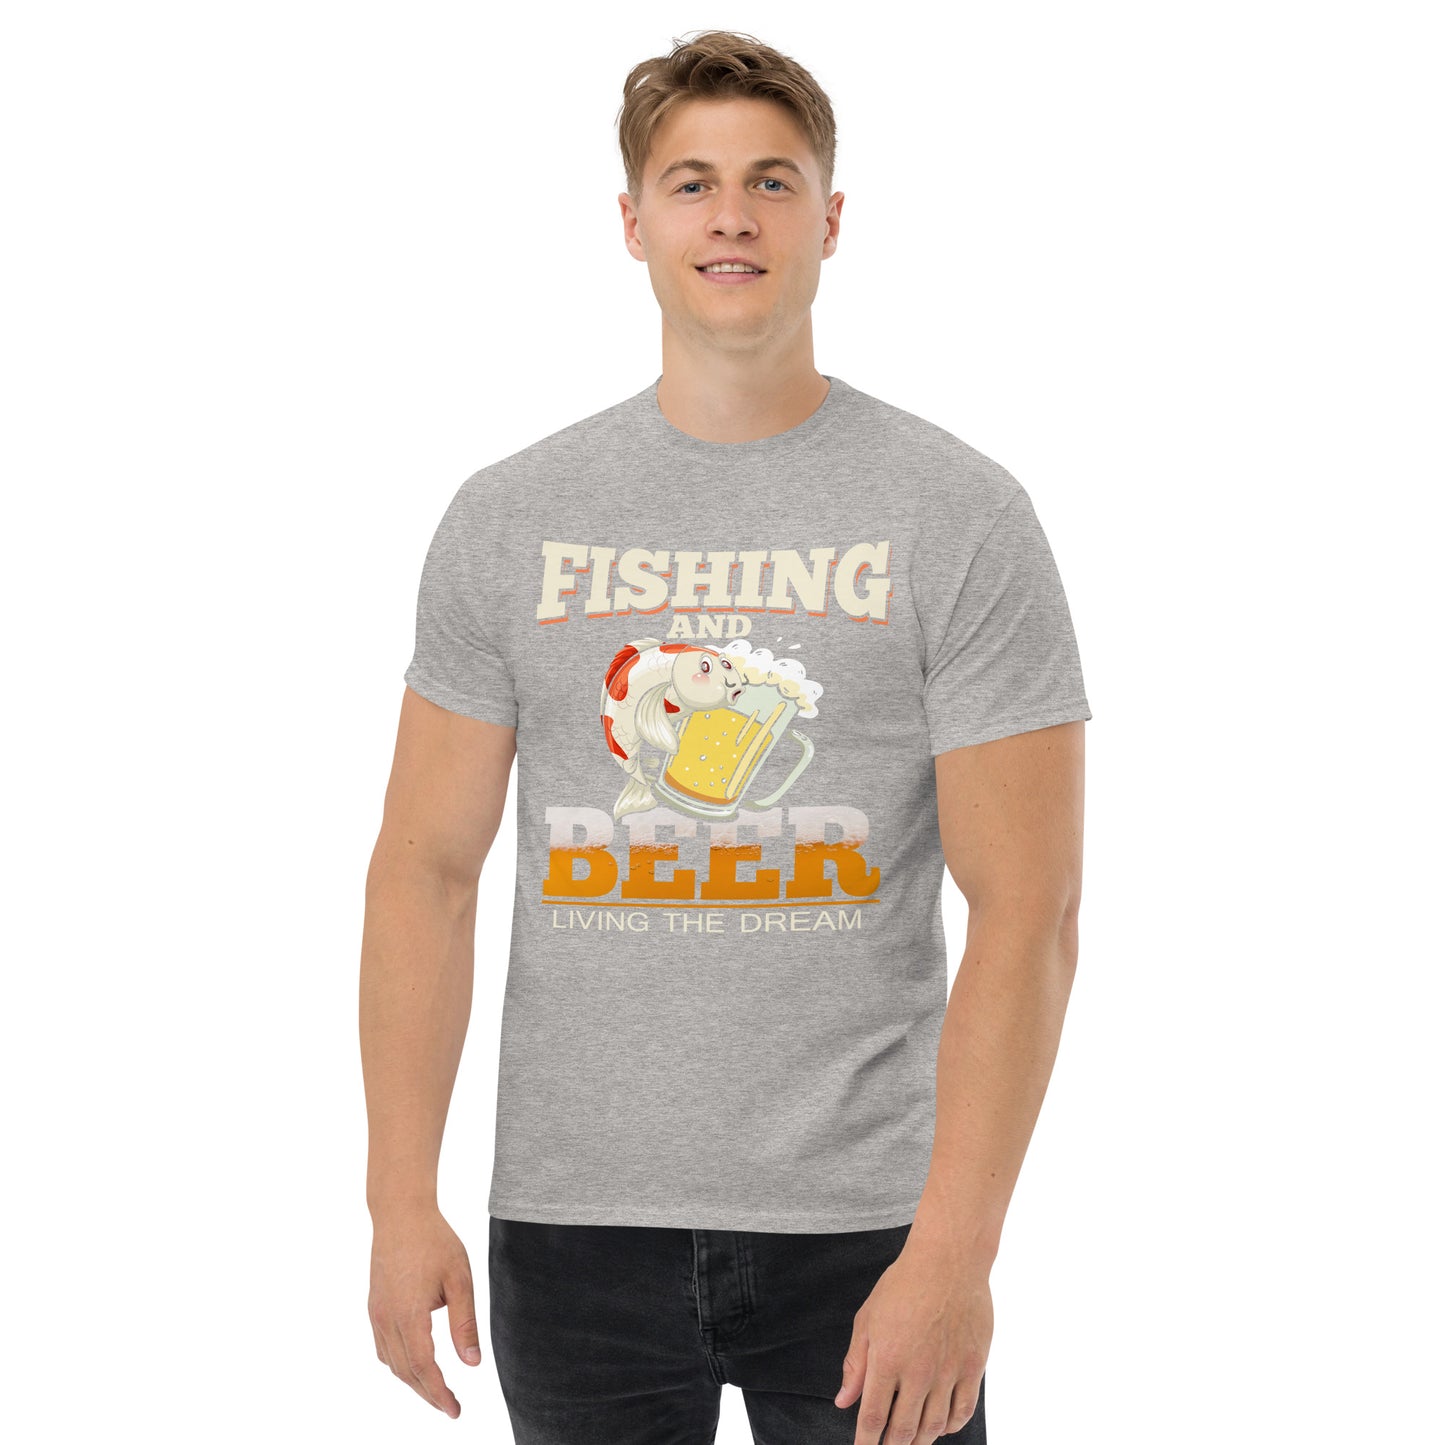 Fishing & Beer, Living The Dream T-Shirt